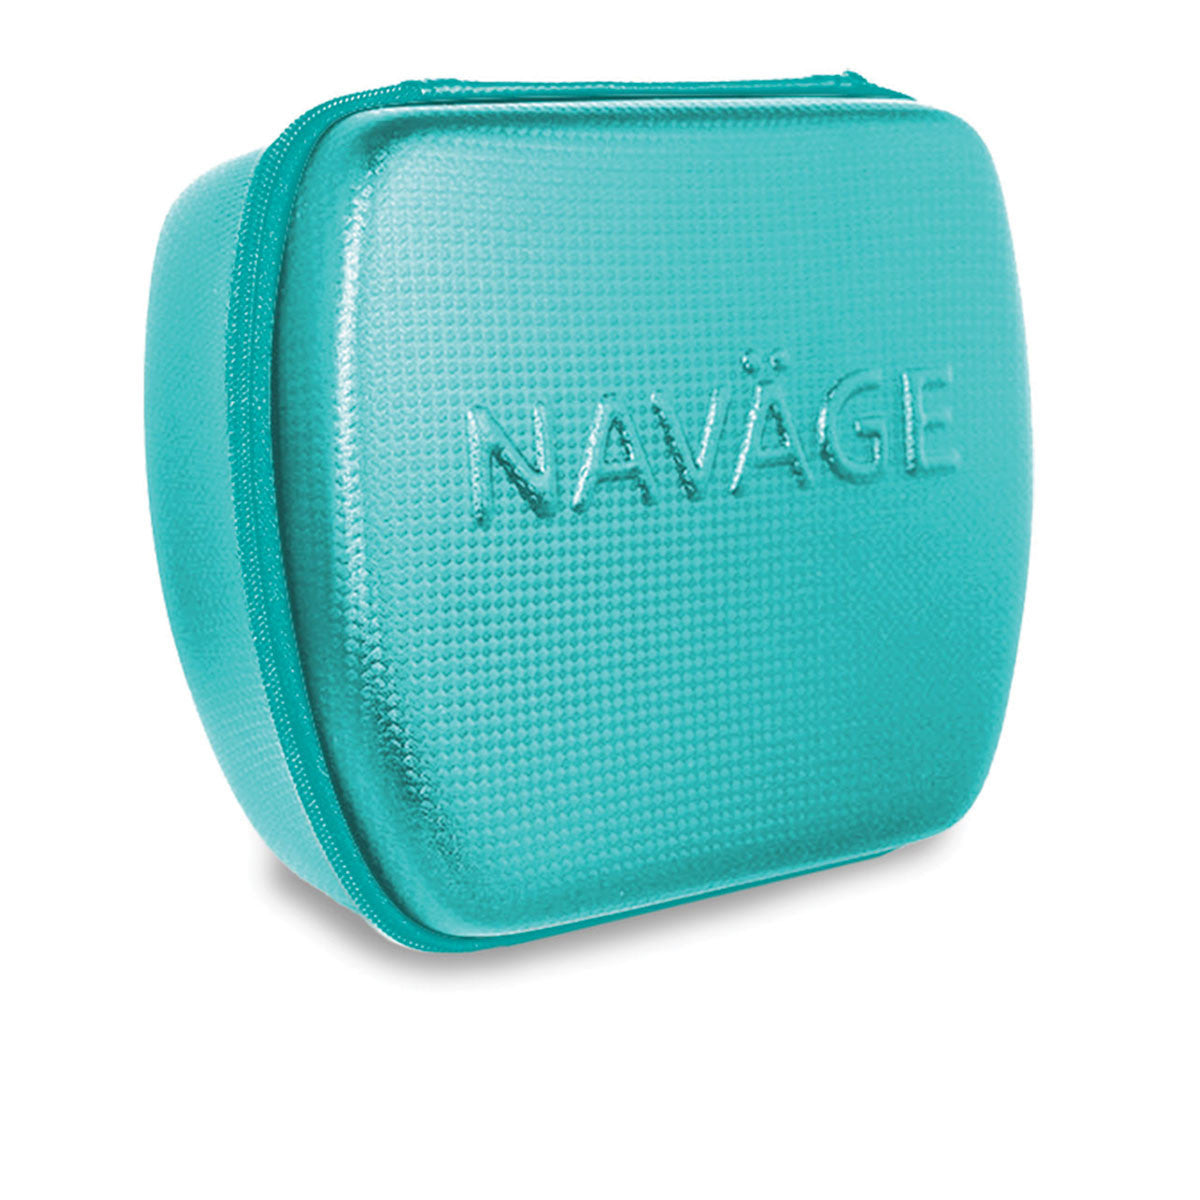  Navage Starter Bundle Nasal Irrigation System - Saline Nasal  Rinse Kit with 1 Nose Cleaner and 30 Salt Pods : Health & Household